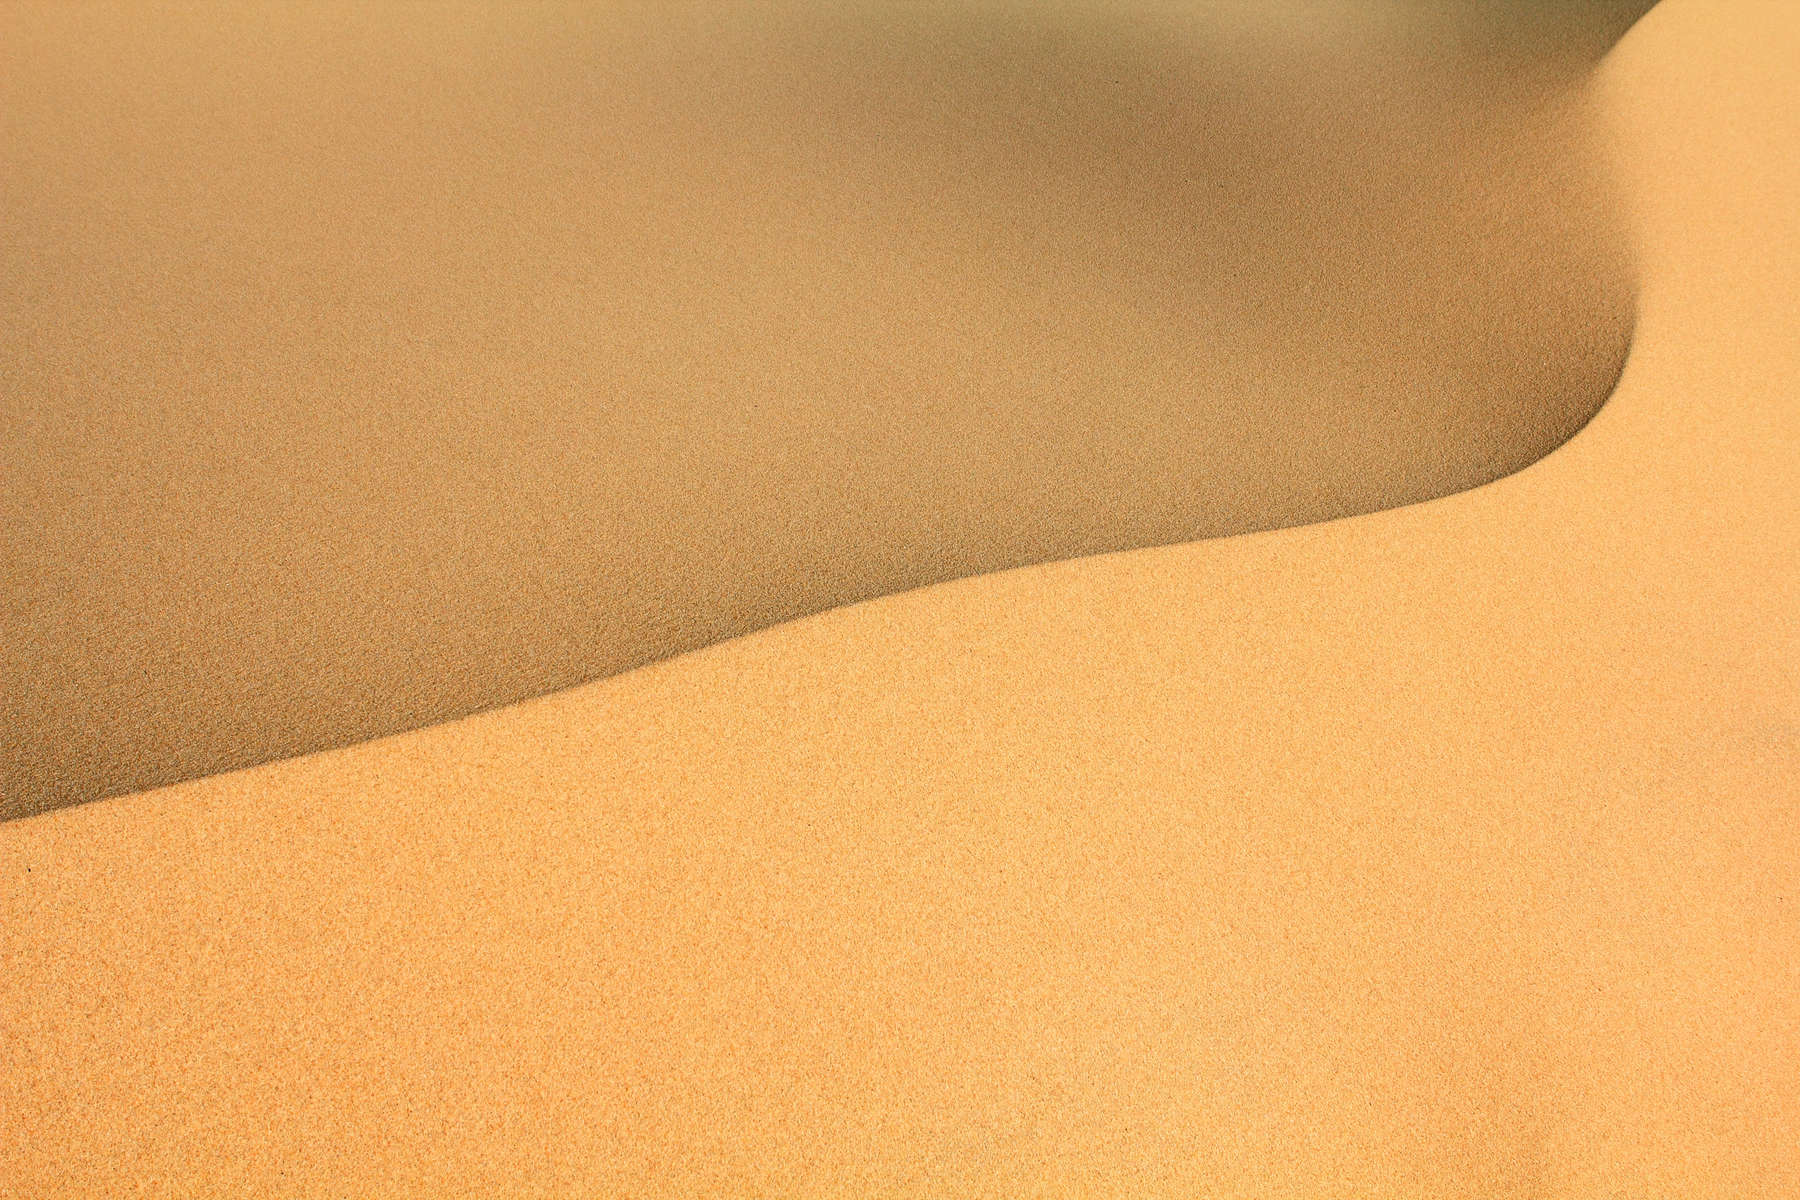 Crest of sand dune